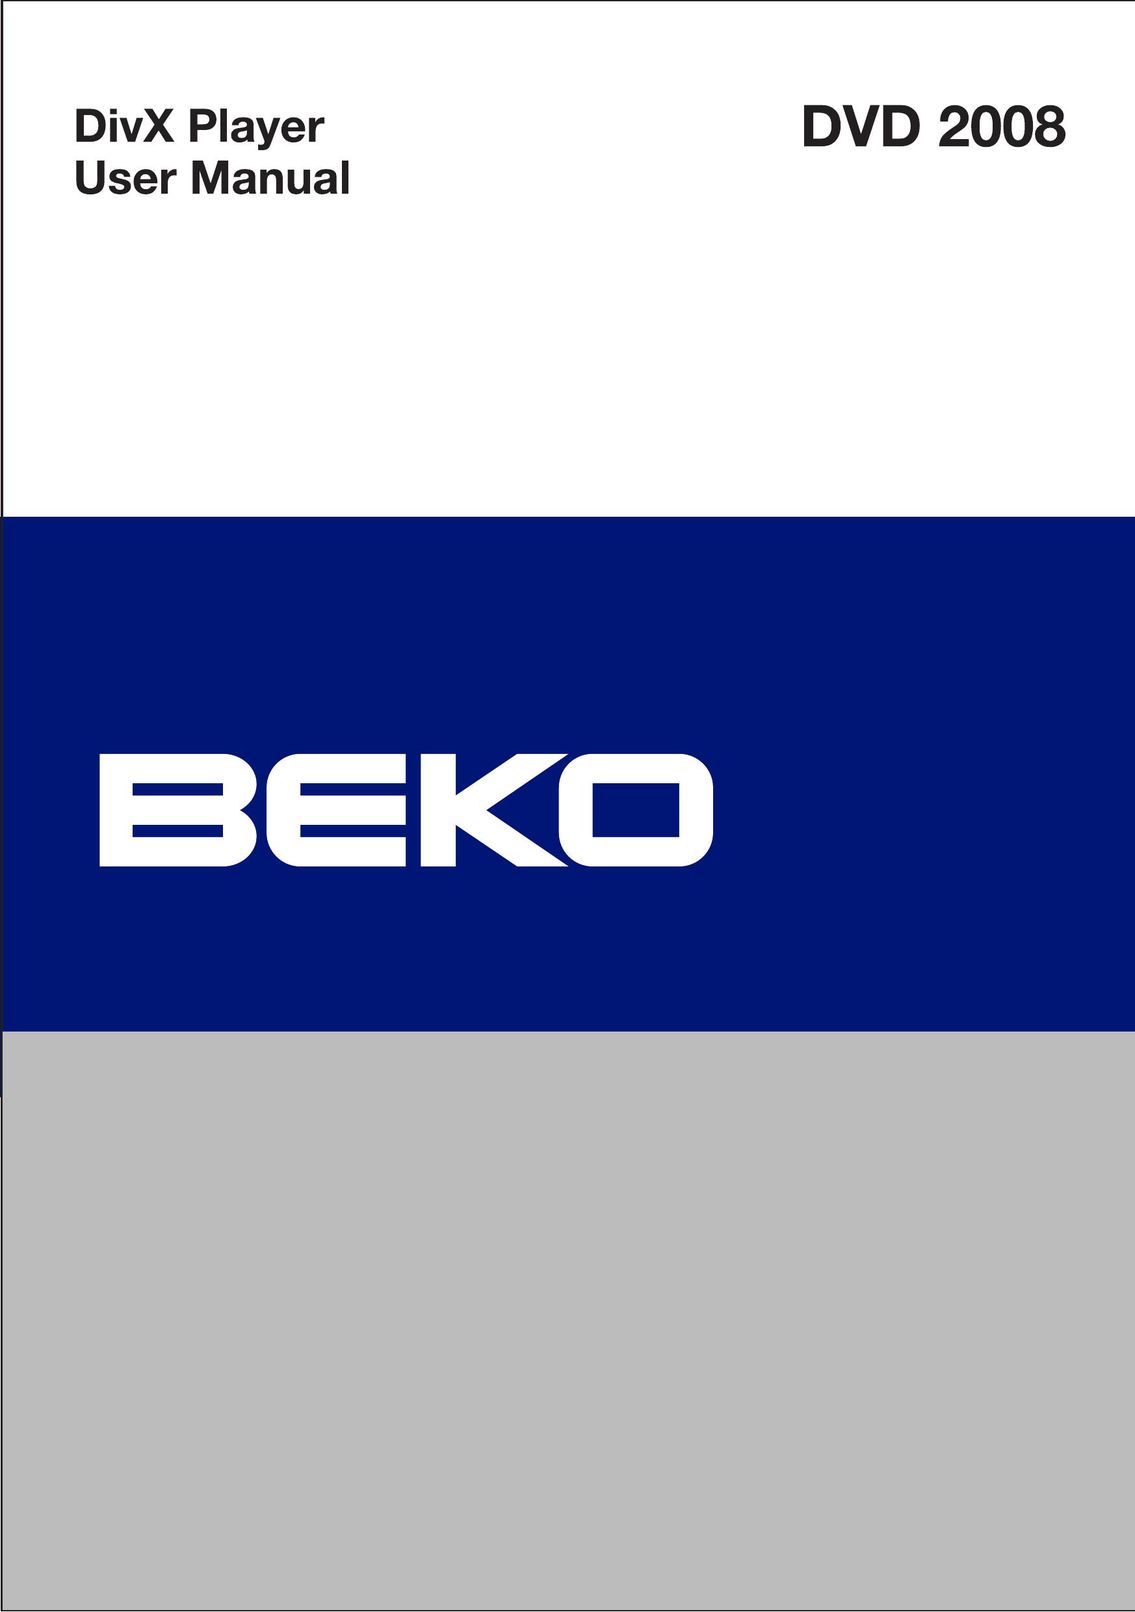 Beko DVD 2008 DVD Player User Manual